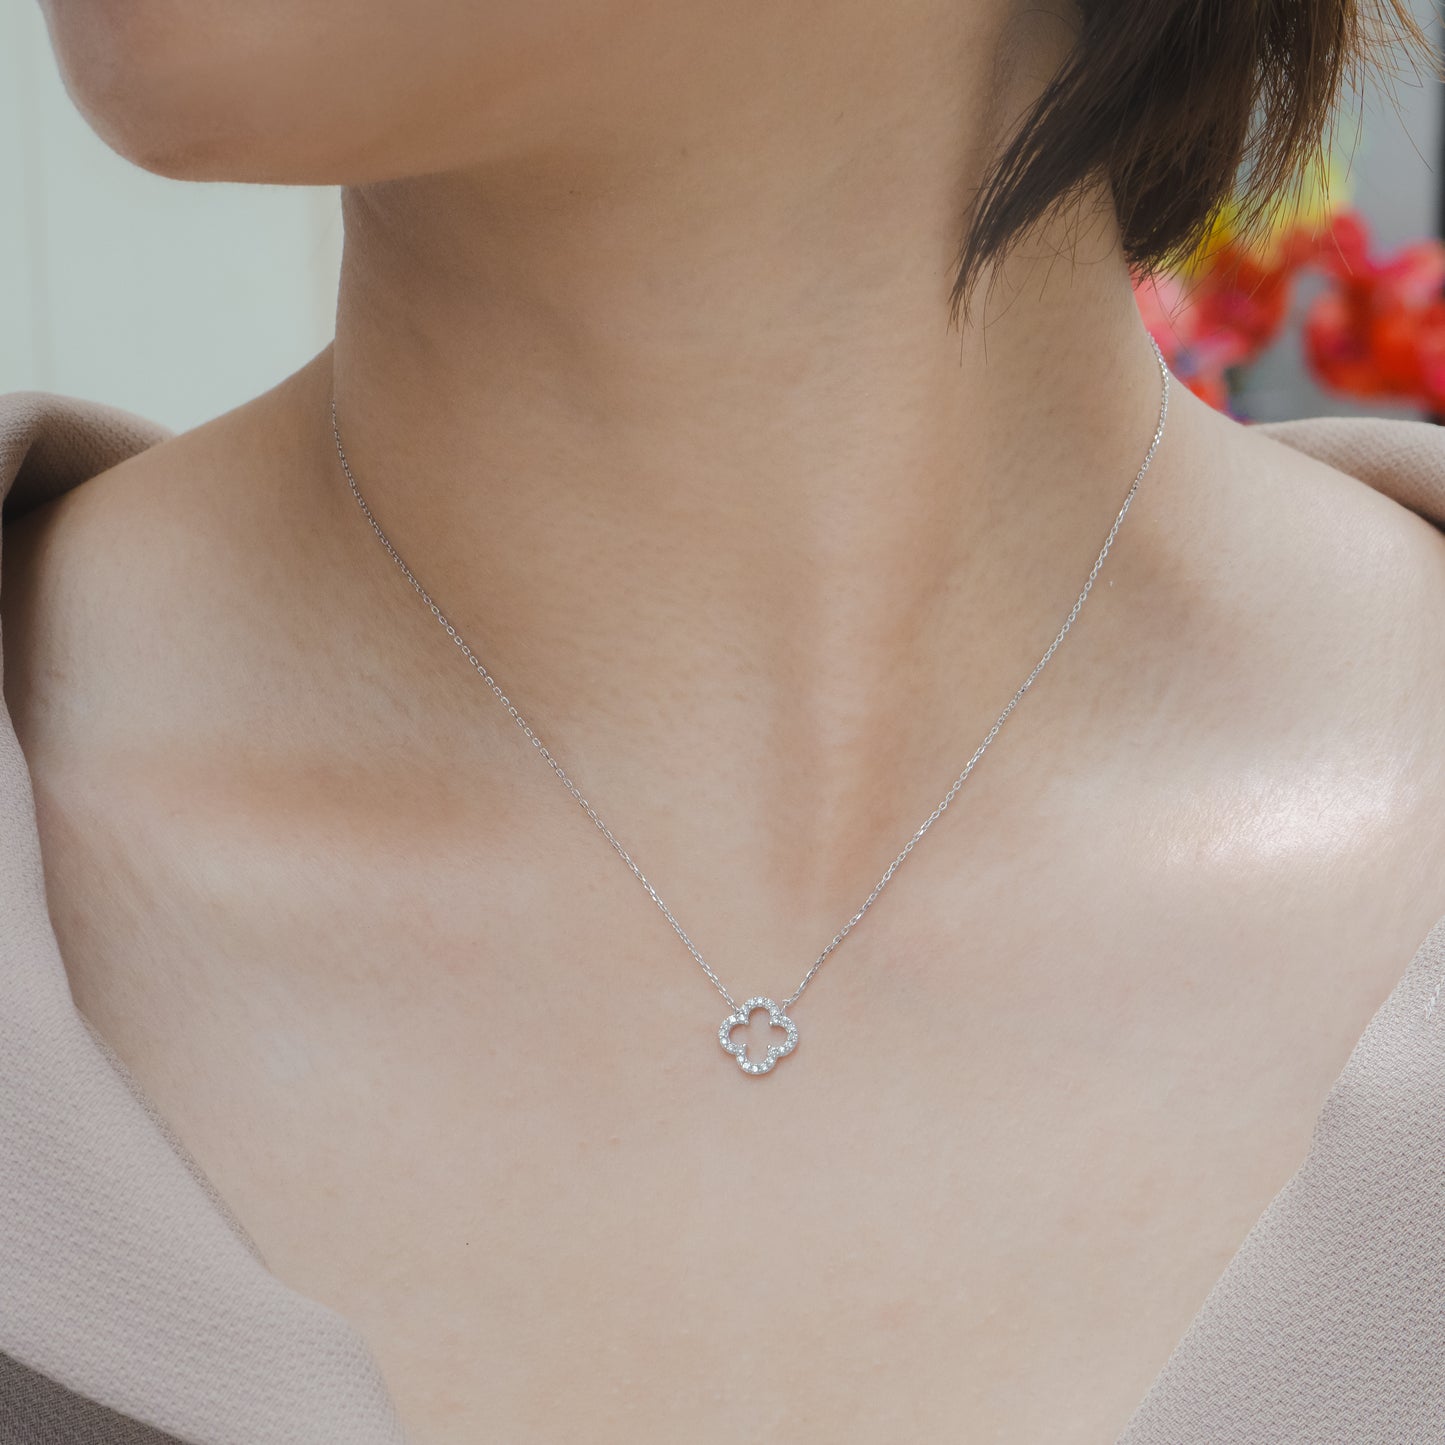 Clover Necklace Medium in Silver